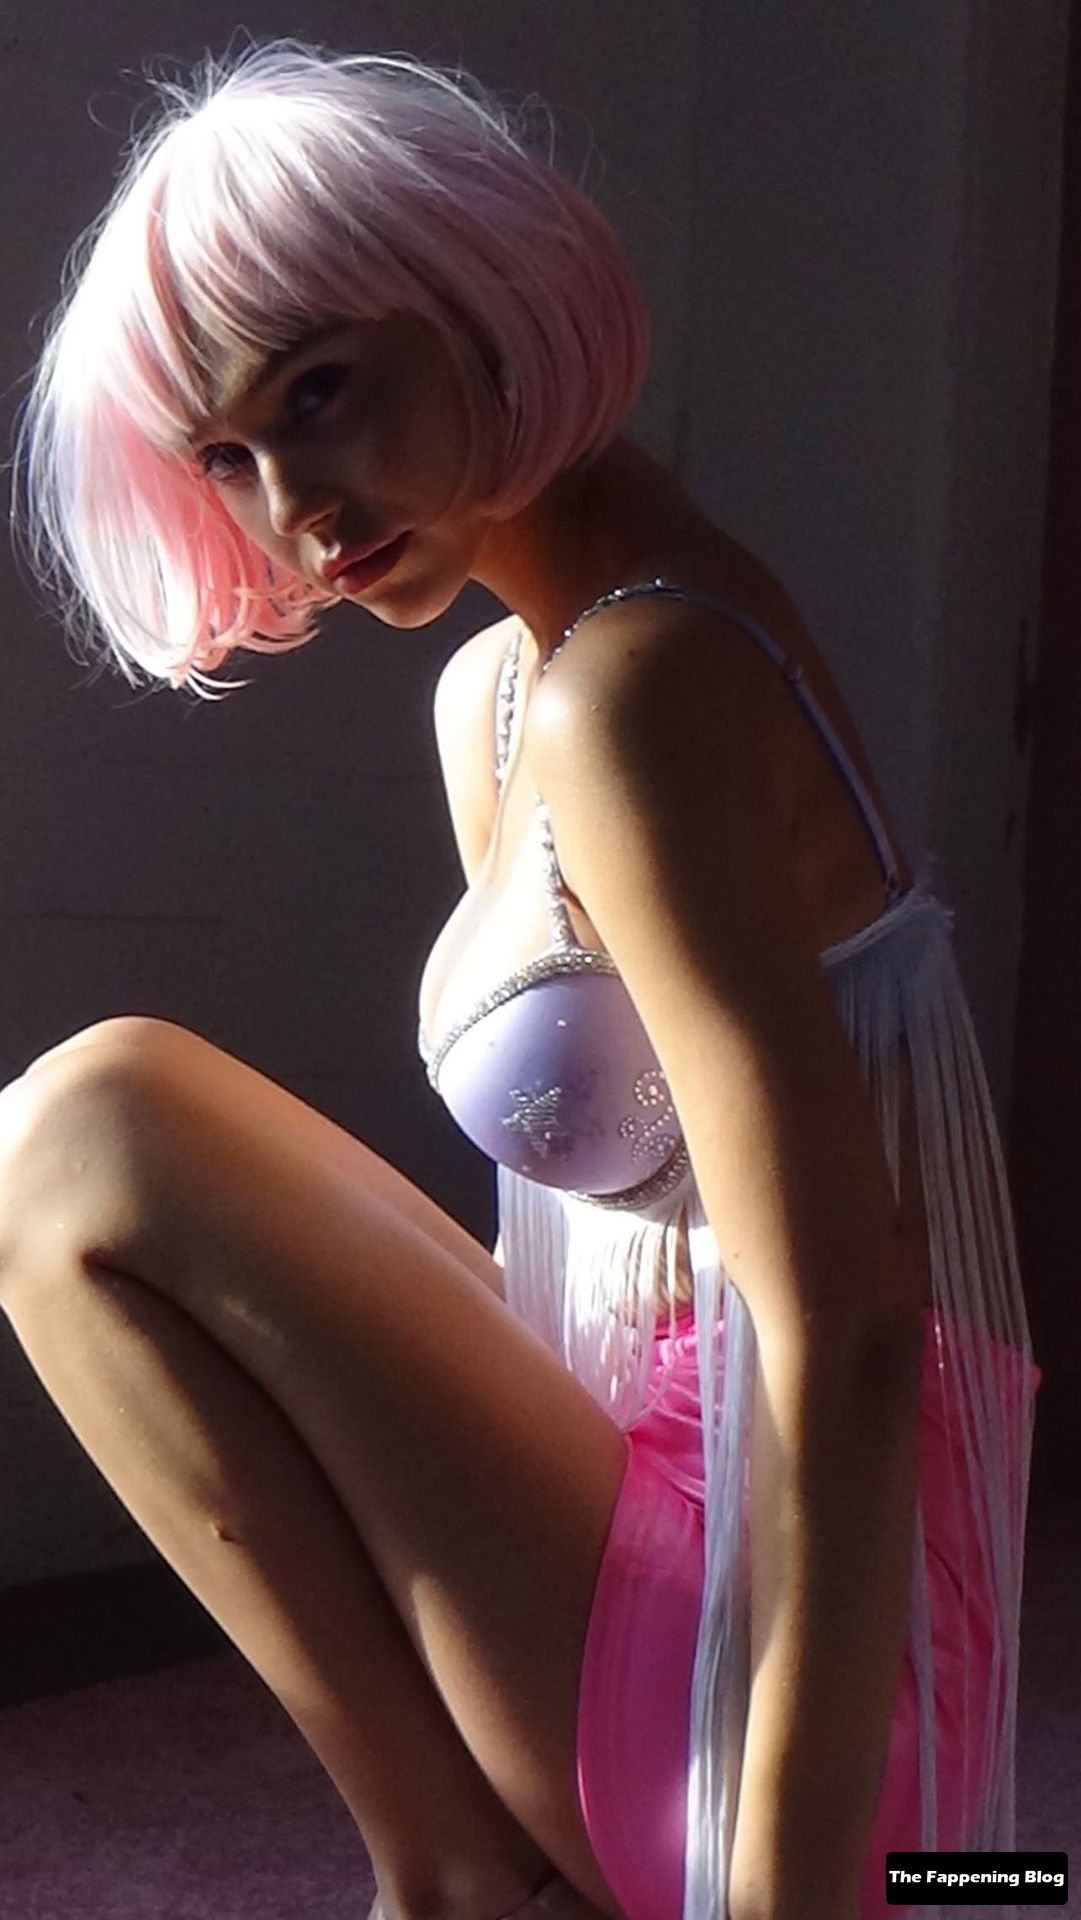 Alexis Ren Looks Hot in a Pink Skirt on Halloween (15 Photos + Video)